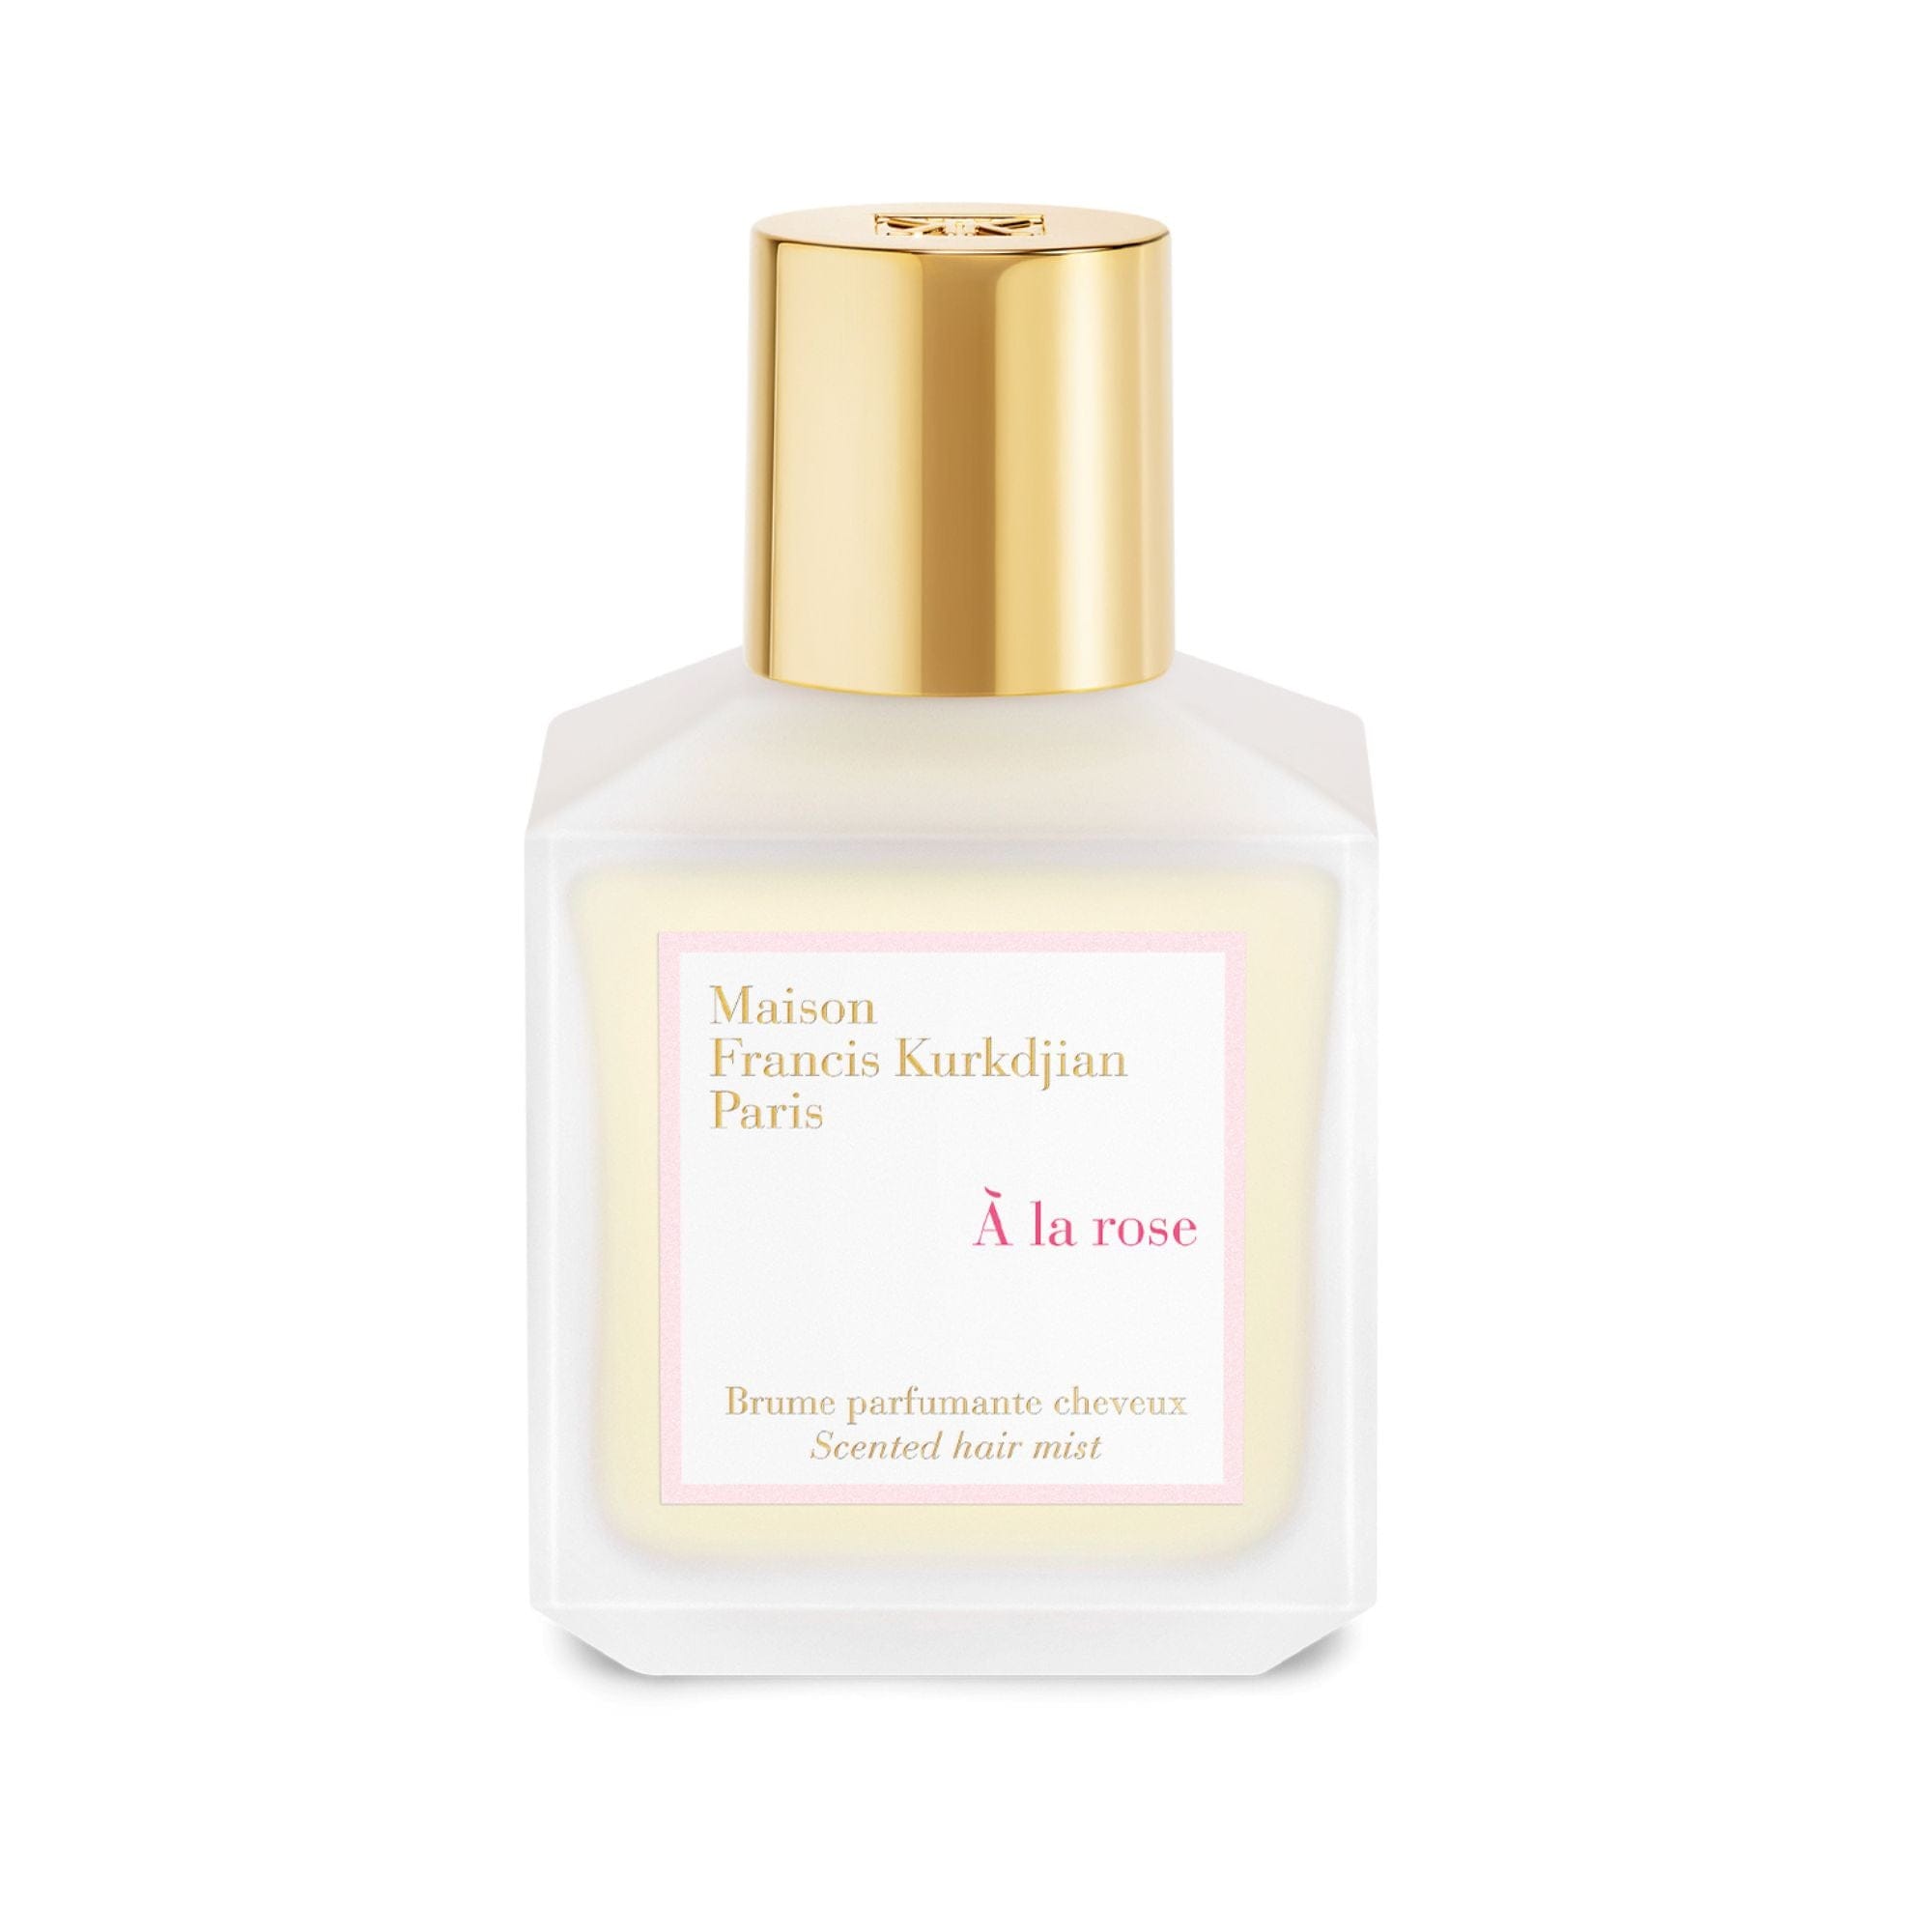 À la rose de Maison Francis Kurkdjian Perfume para el cabello